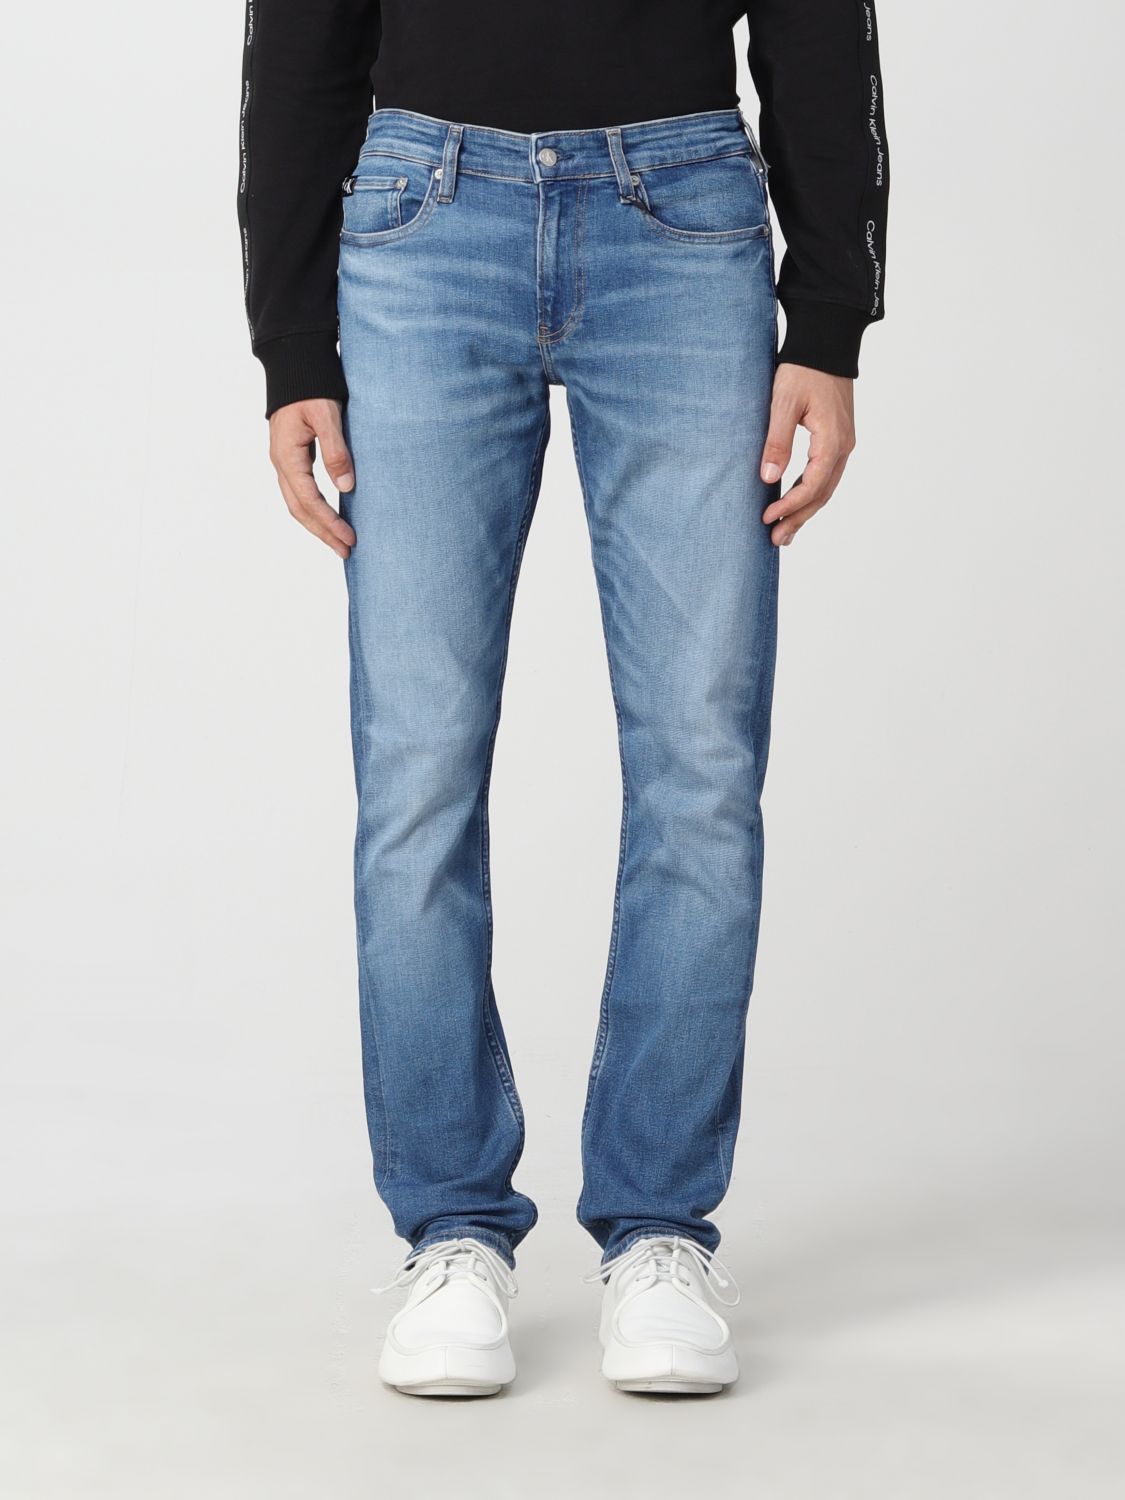 CALVIN KLEIN JEANS: Jeans para hombre, Denim | Calvin Klein Jeans J30J321122 en línea en GIGLIO.COM